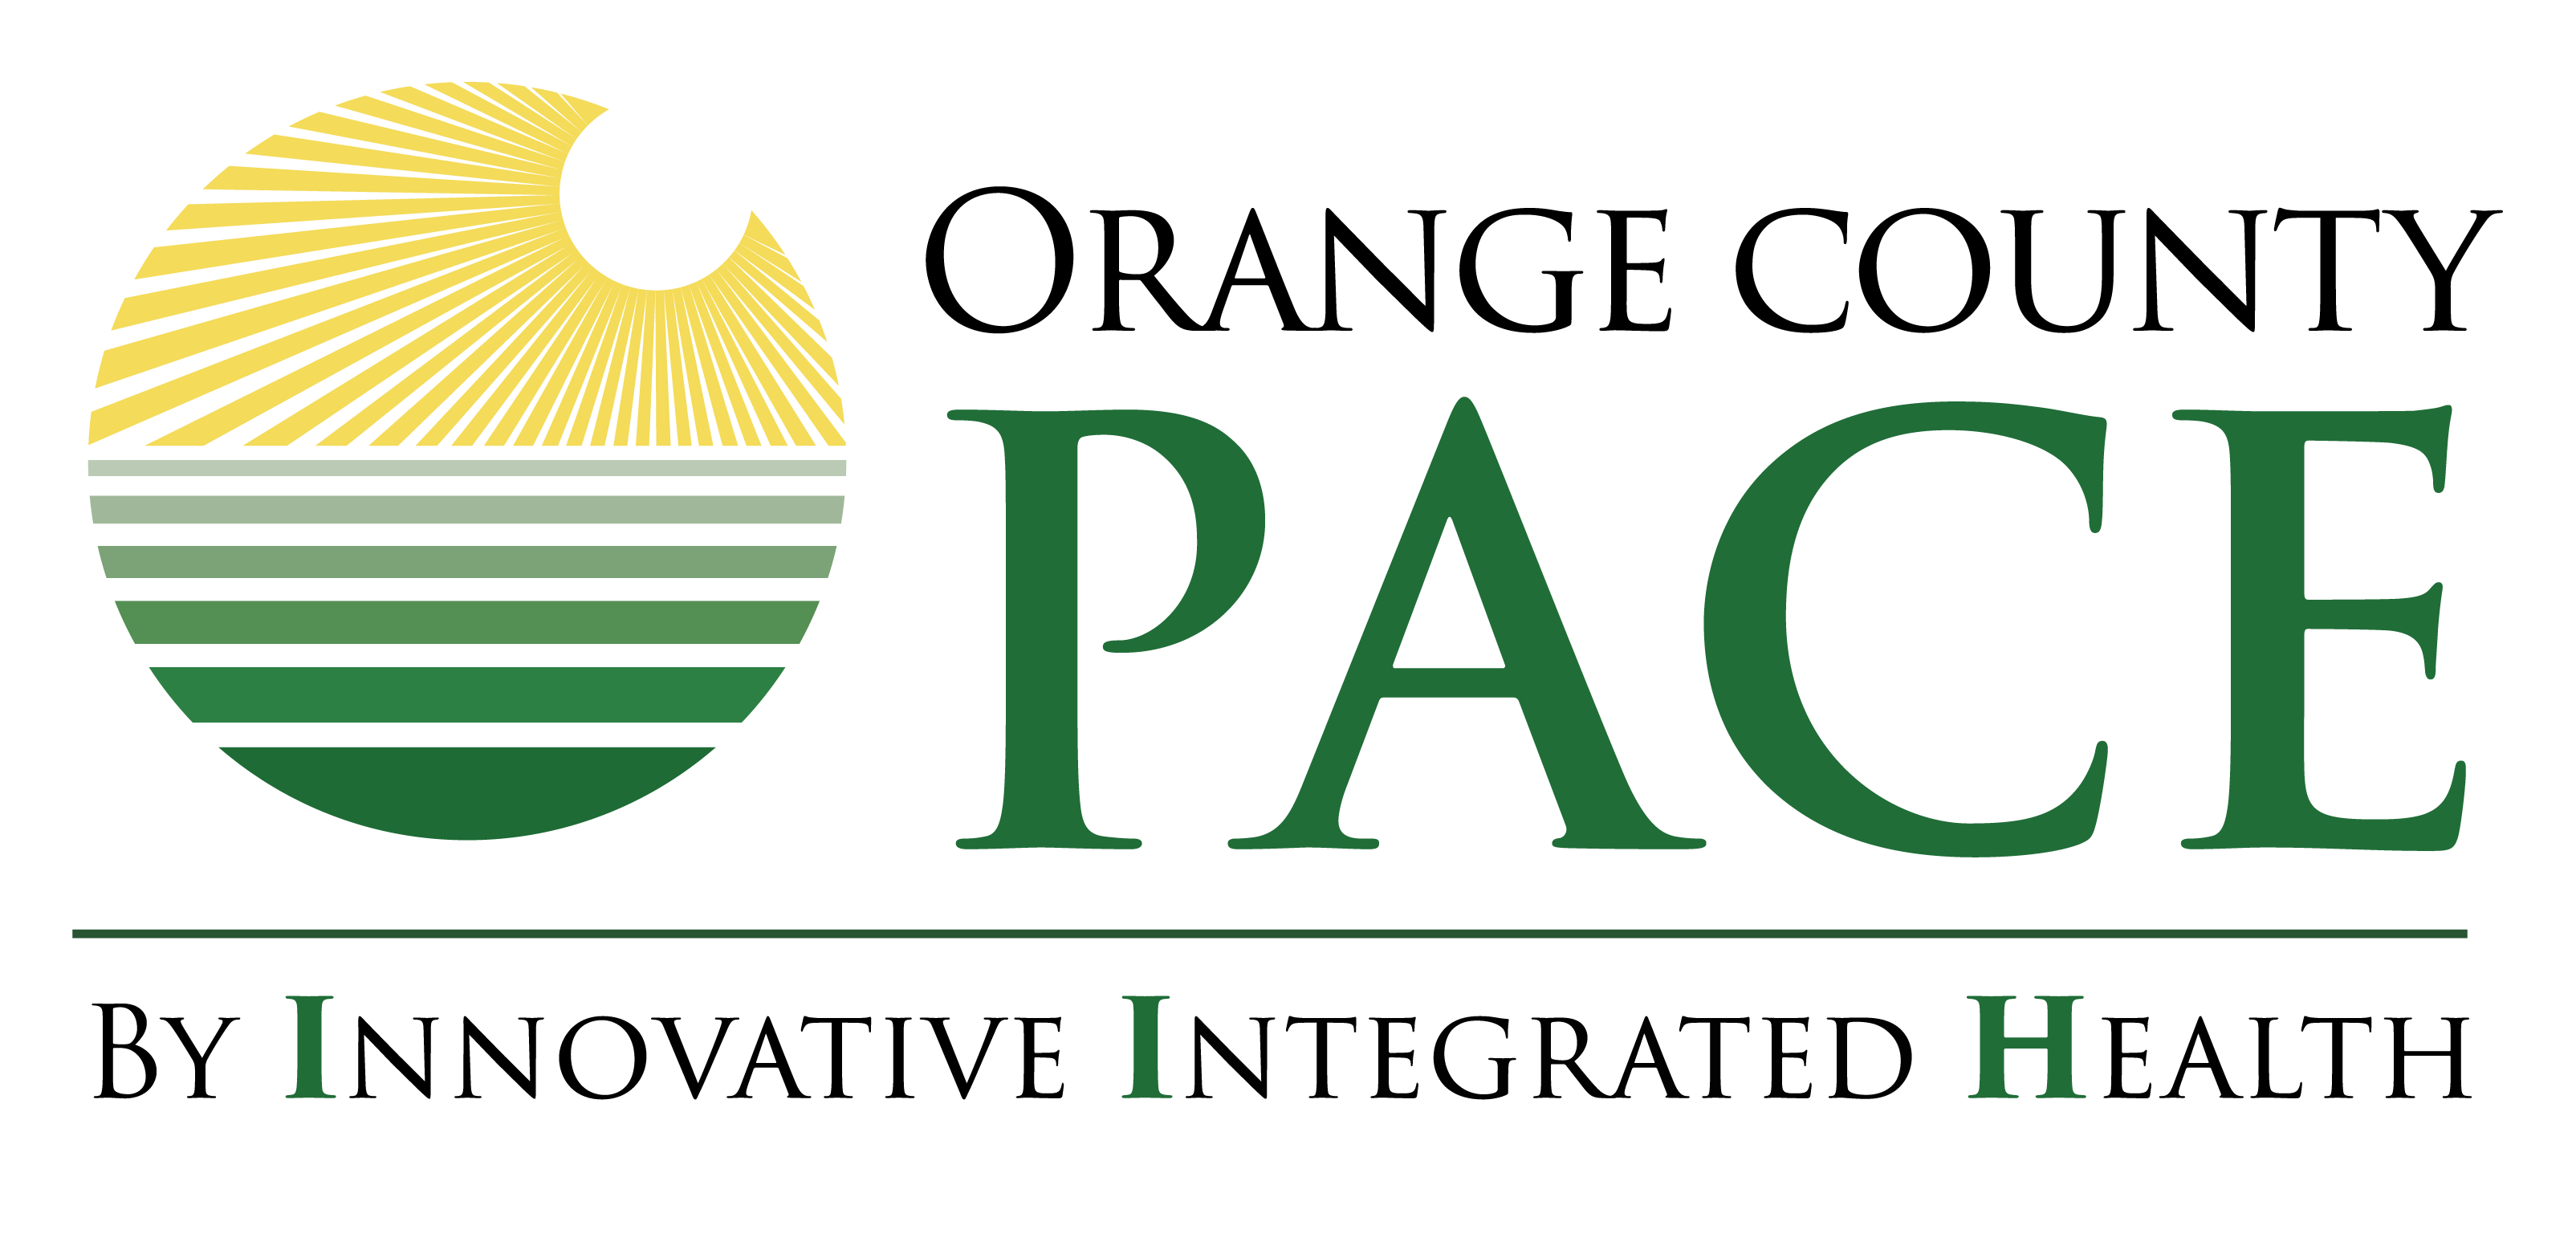 ORANGE COUNTY PACE Logo